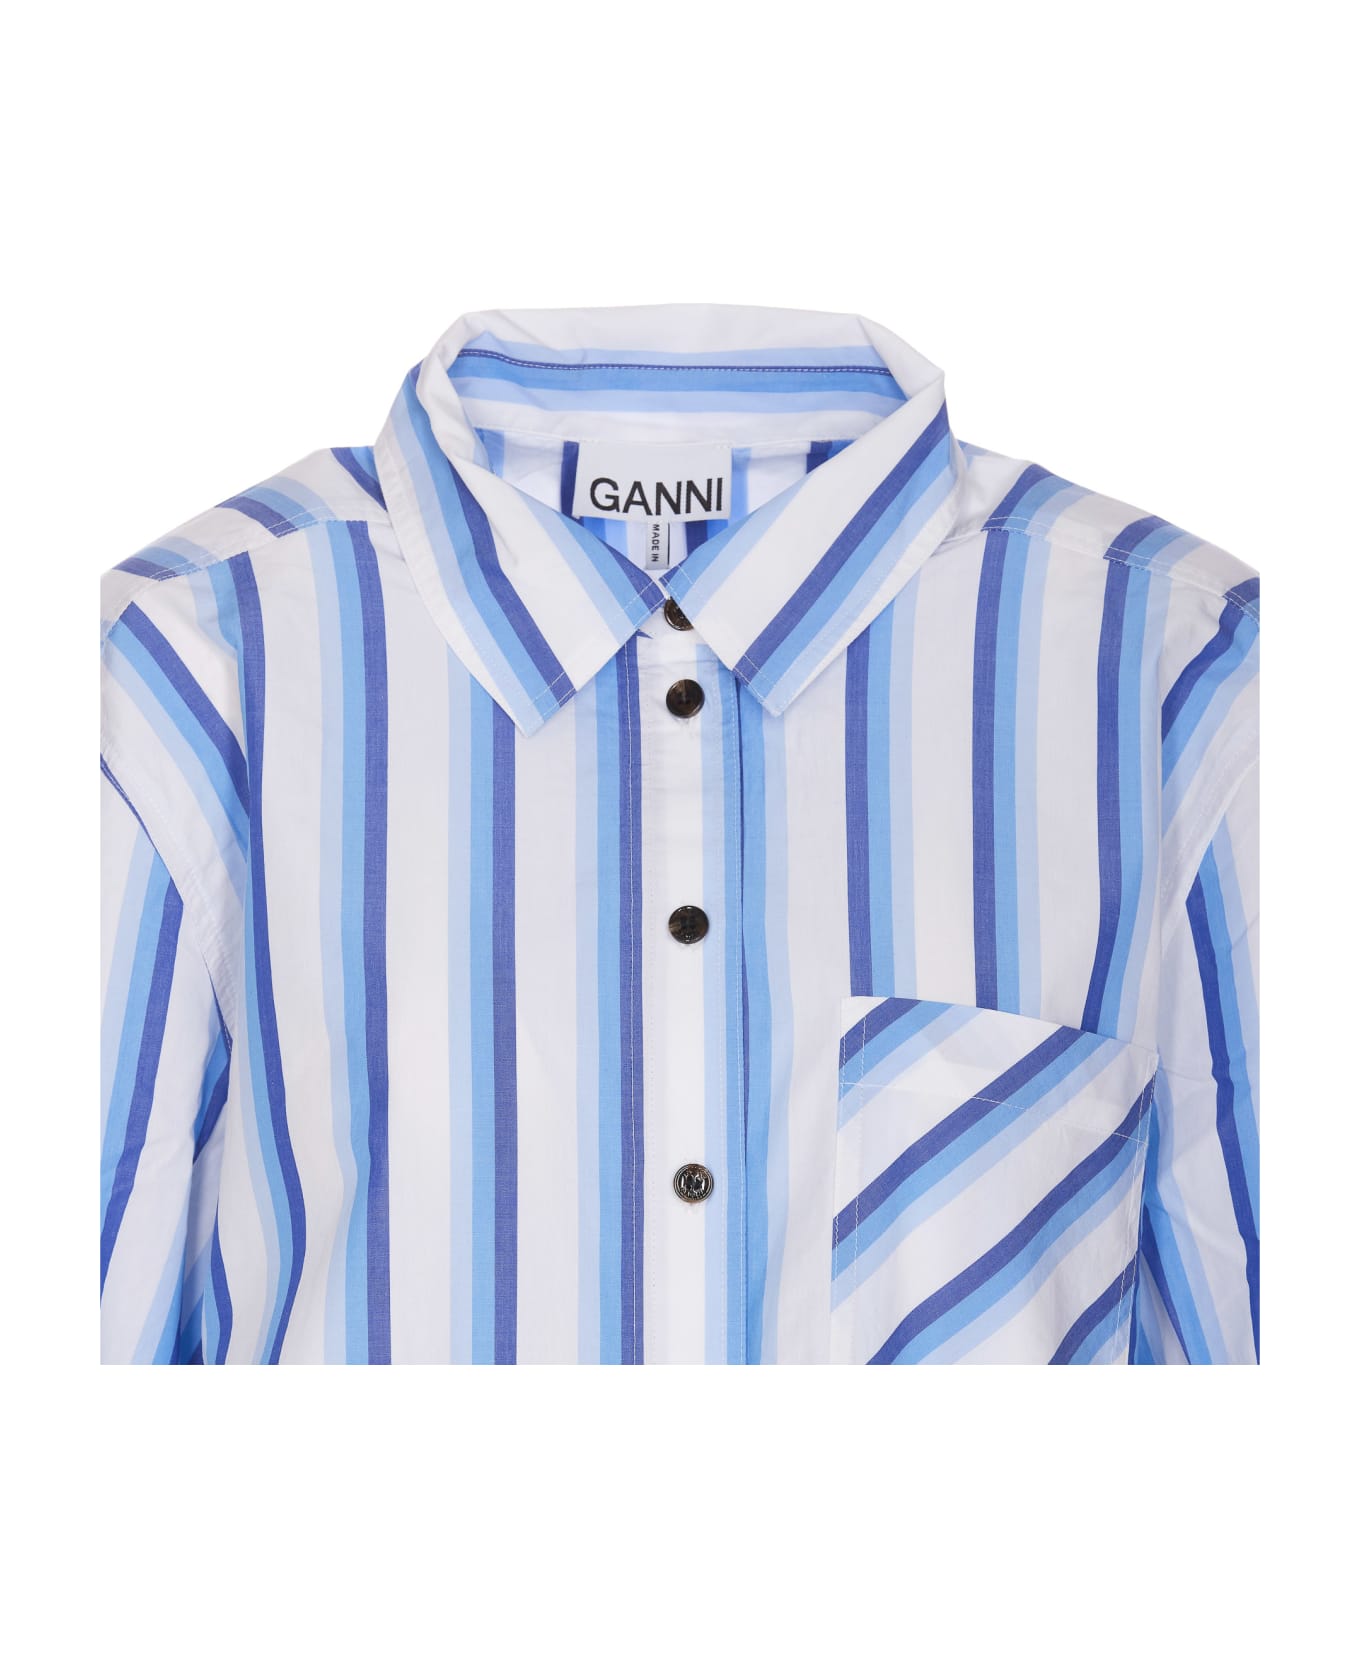 Ganni Striped Shirt - Blue シャツ